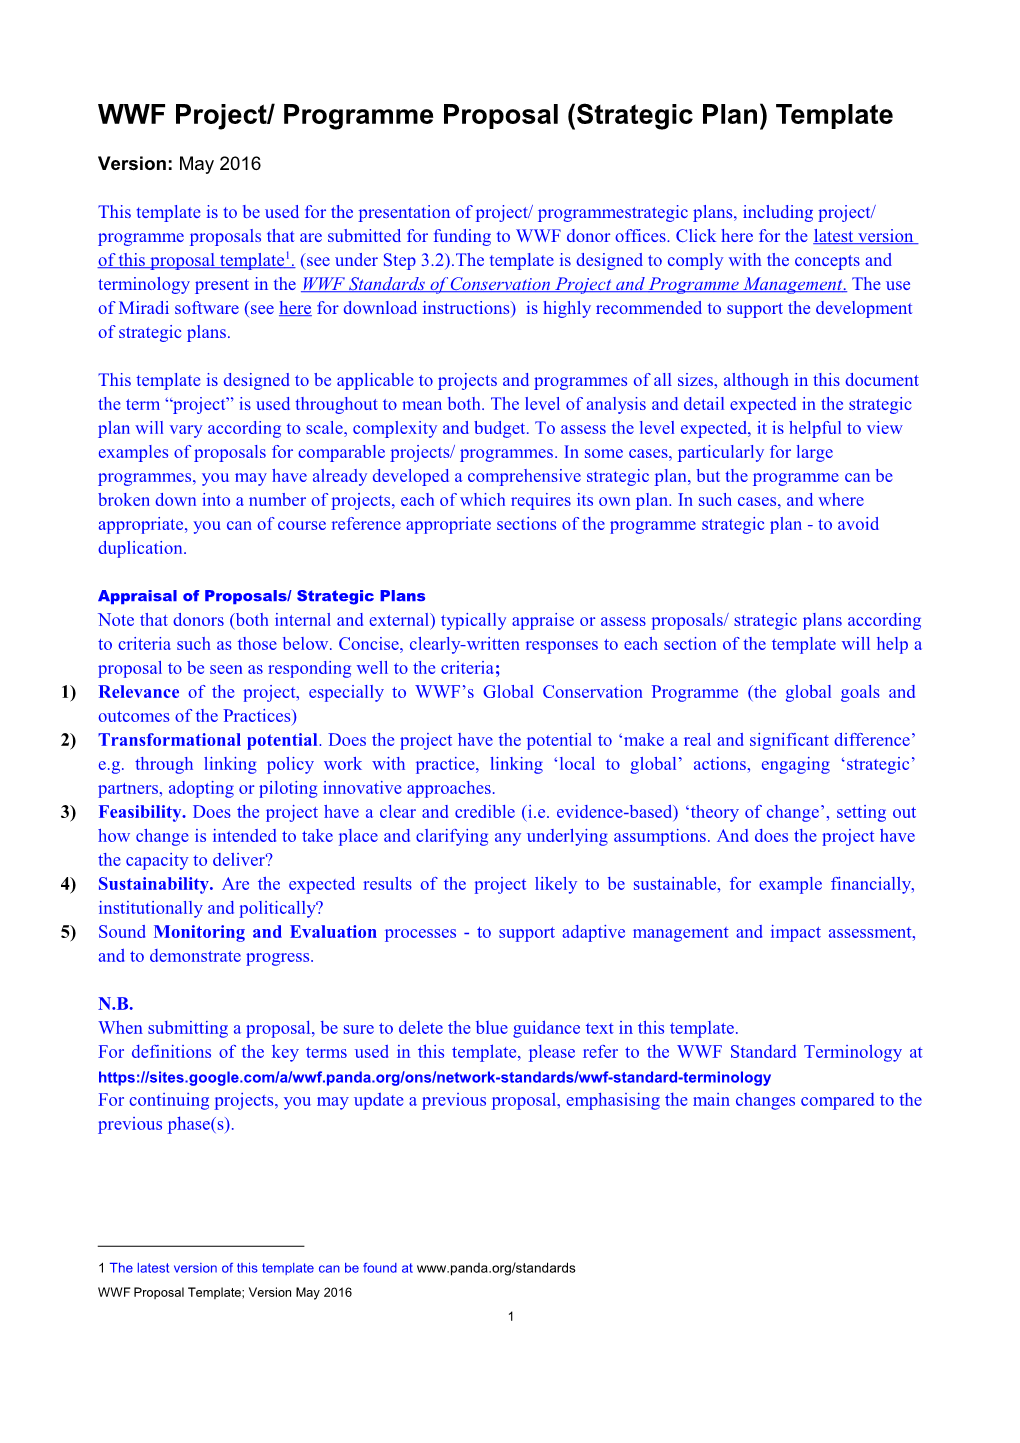 WWF (Internal) Project/ Programme Proposal Form